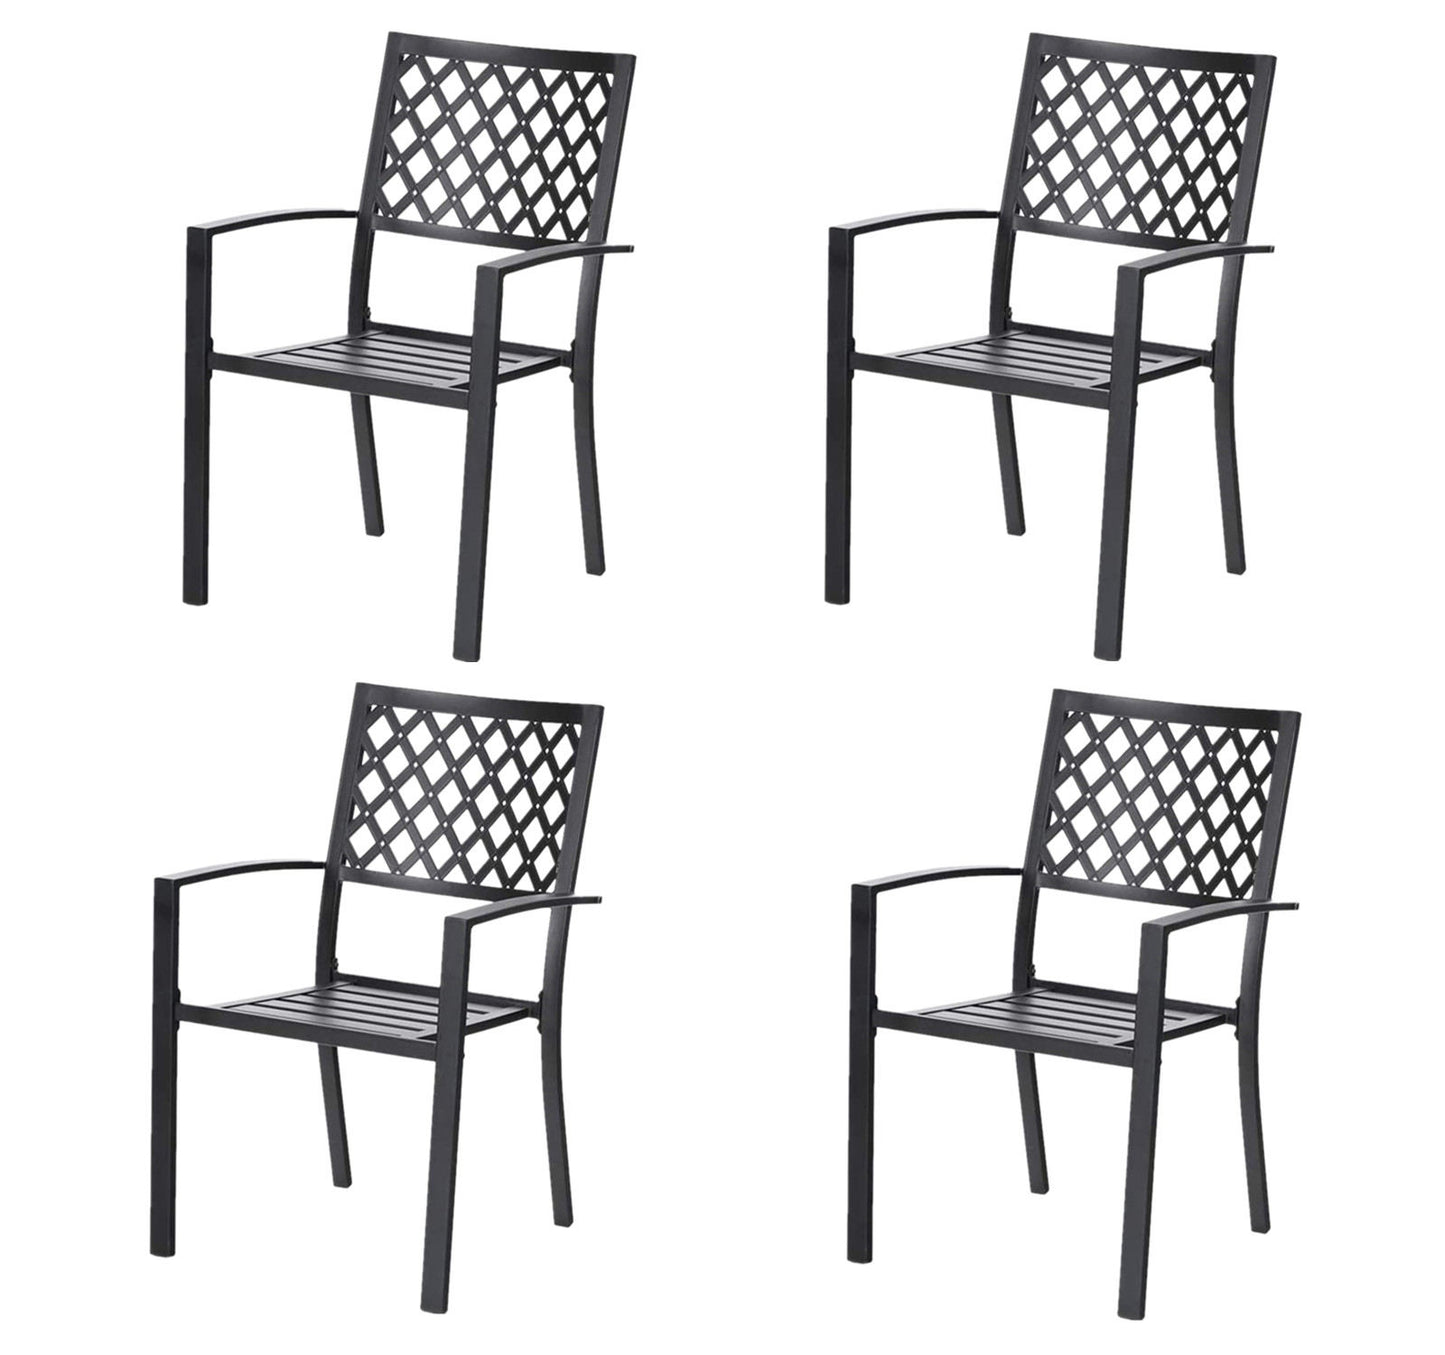 Sophia & William Outdoor Patio Metal Dining Chairs Set of 4, Black